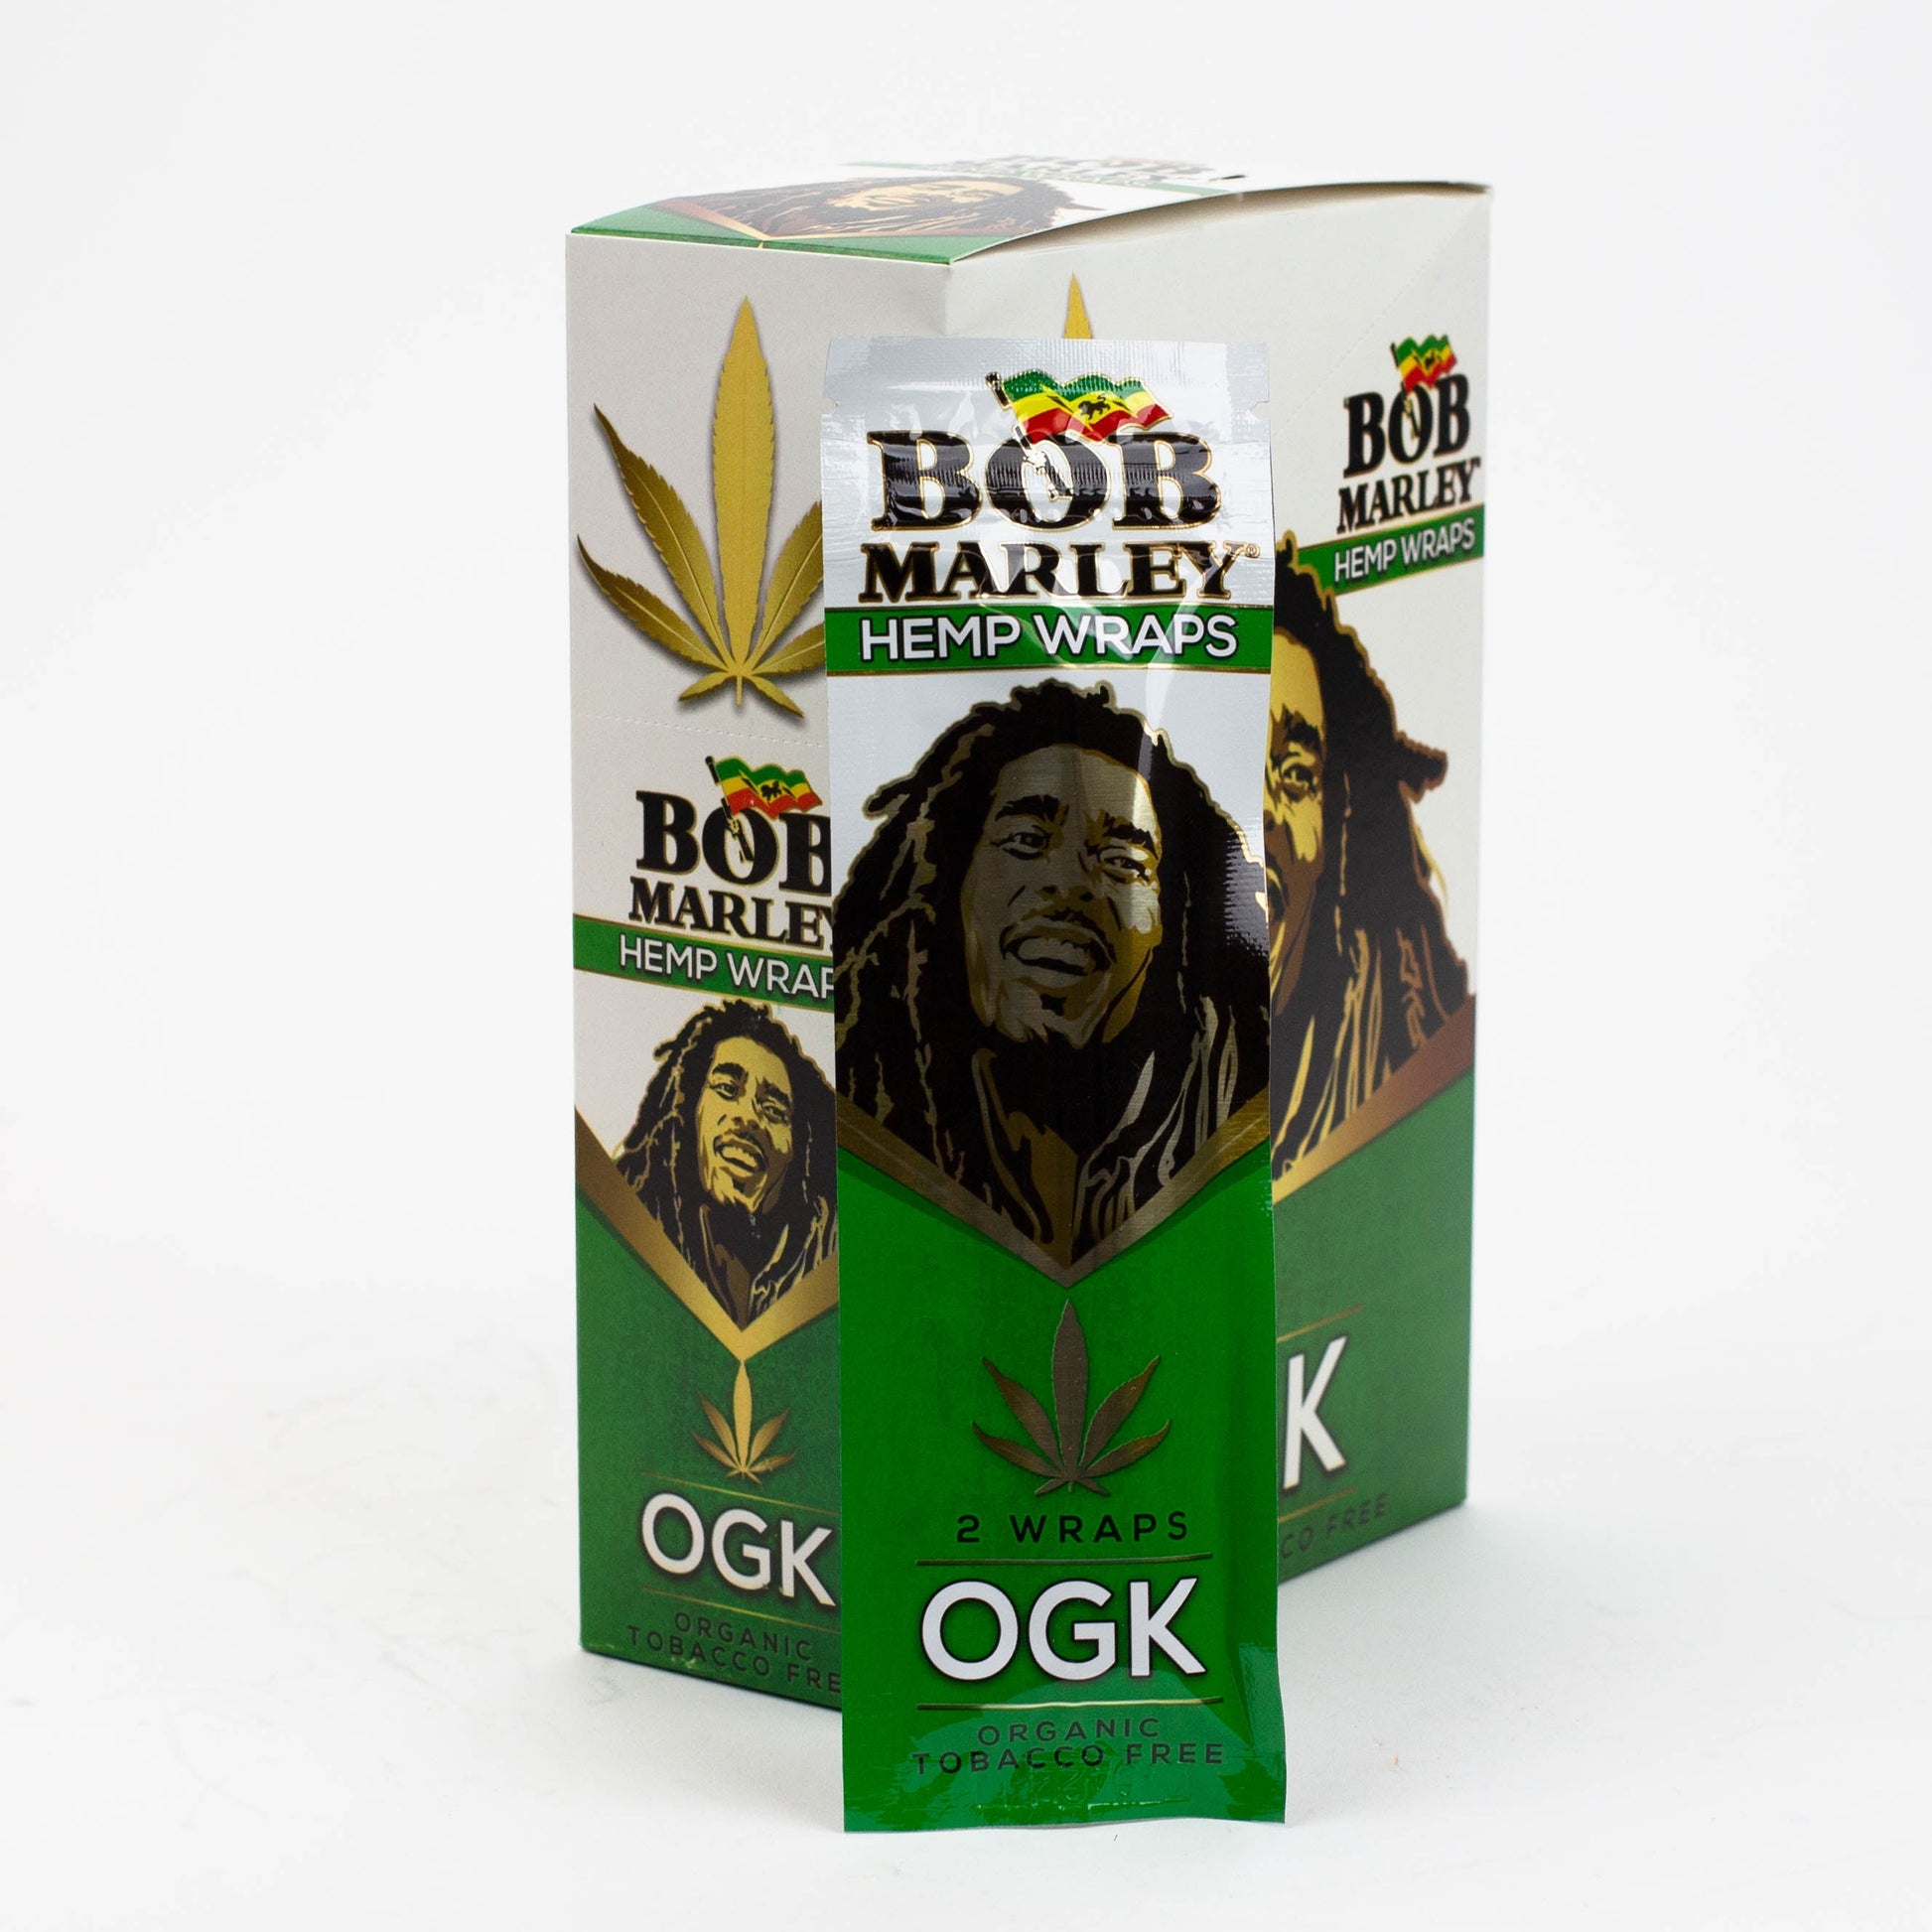 BOB Marley Hemp Wraps All Flavors 25pk Smoke Drop OGK 